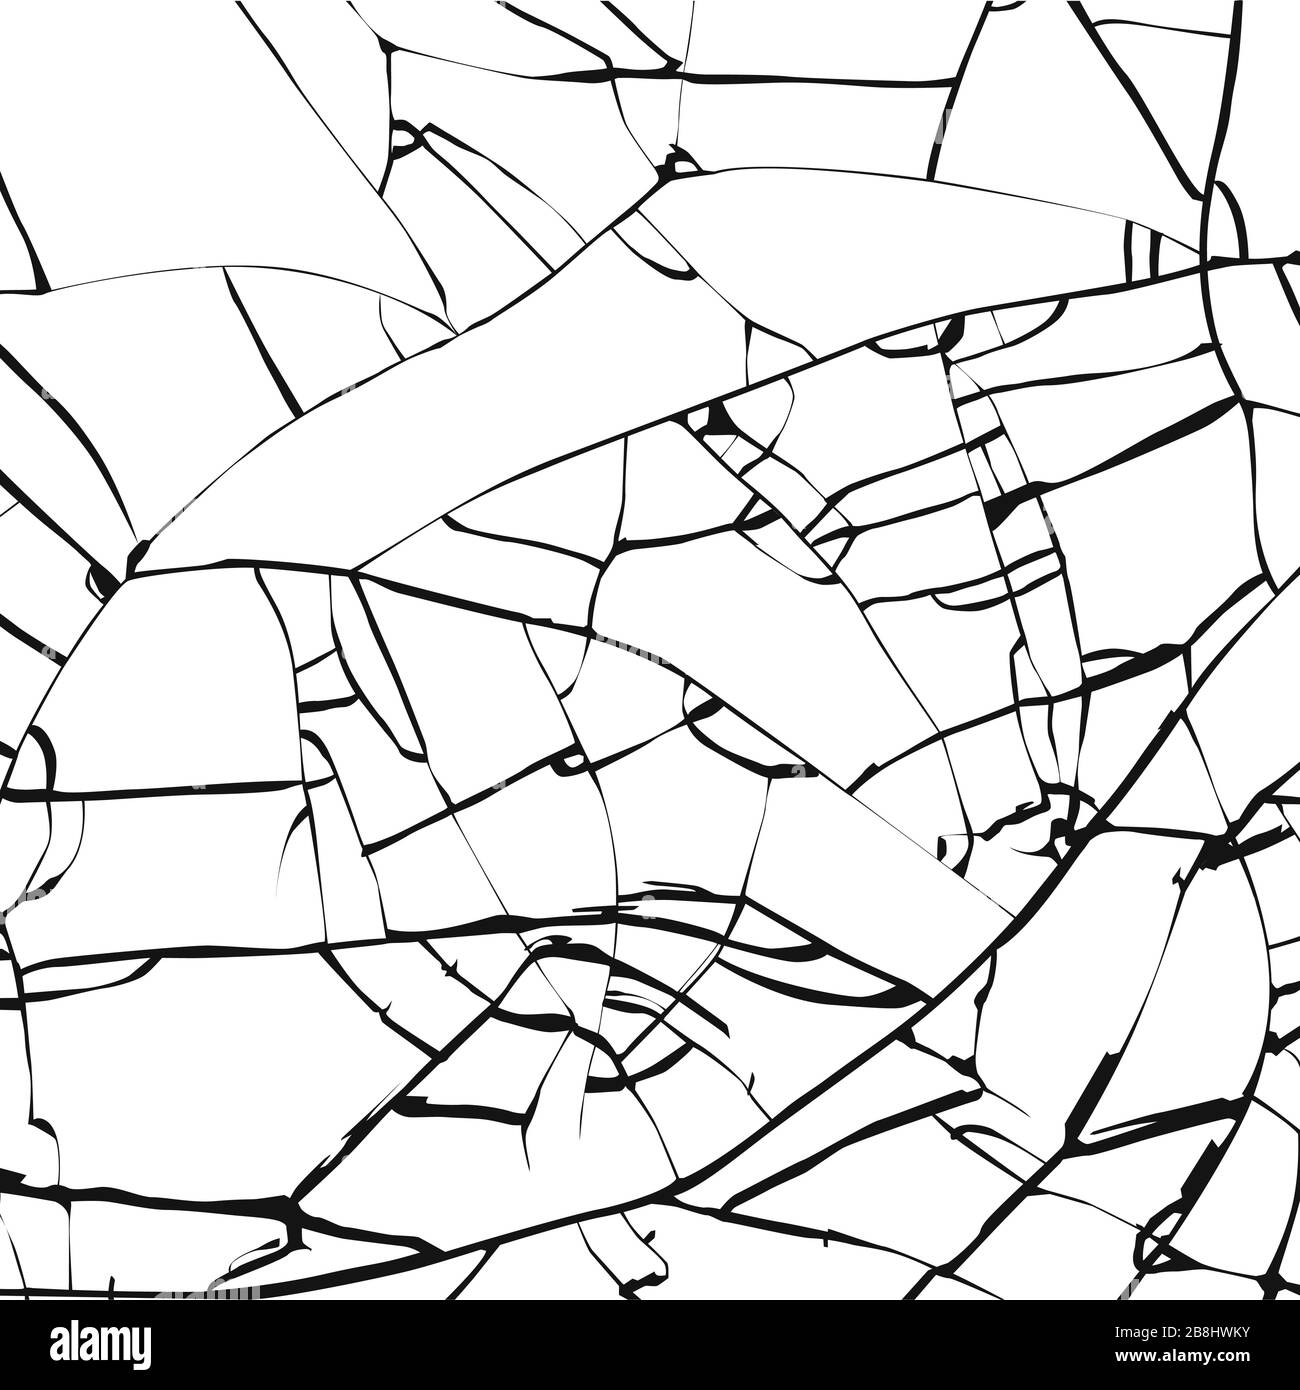 Broken glass texture. Cracked mirror pattern. Vector illustration isolated on white background Stock Vector